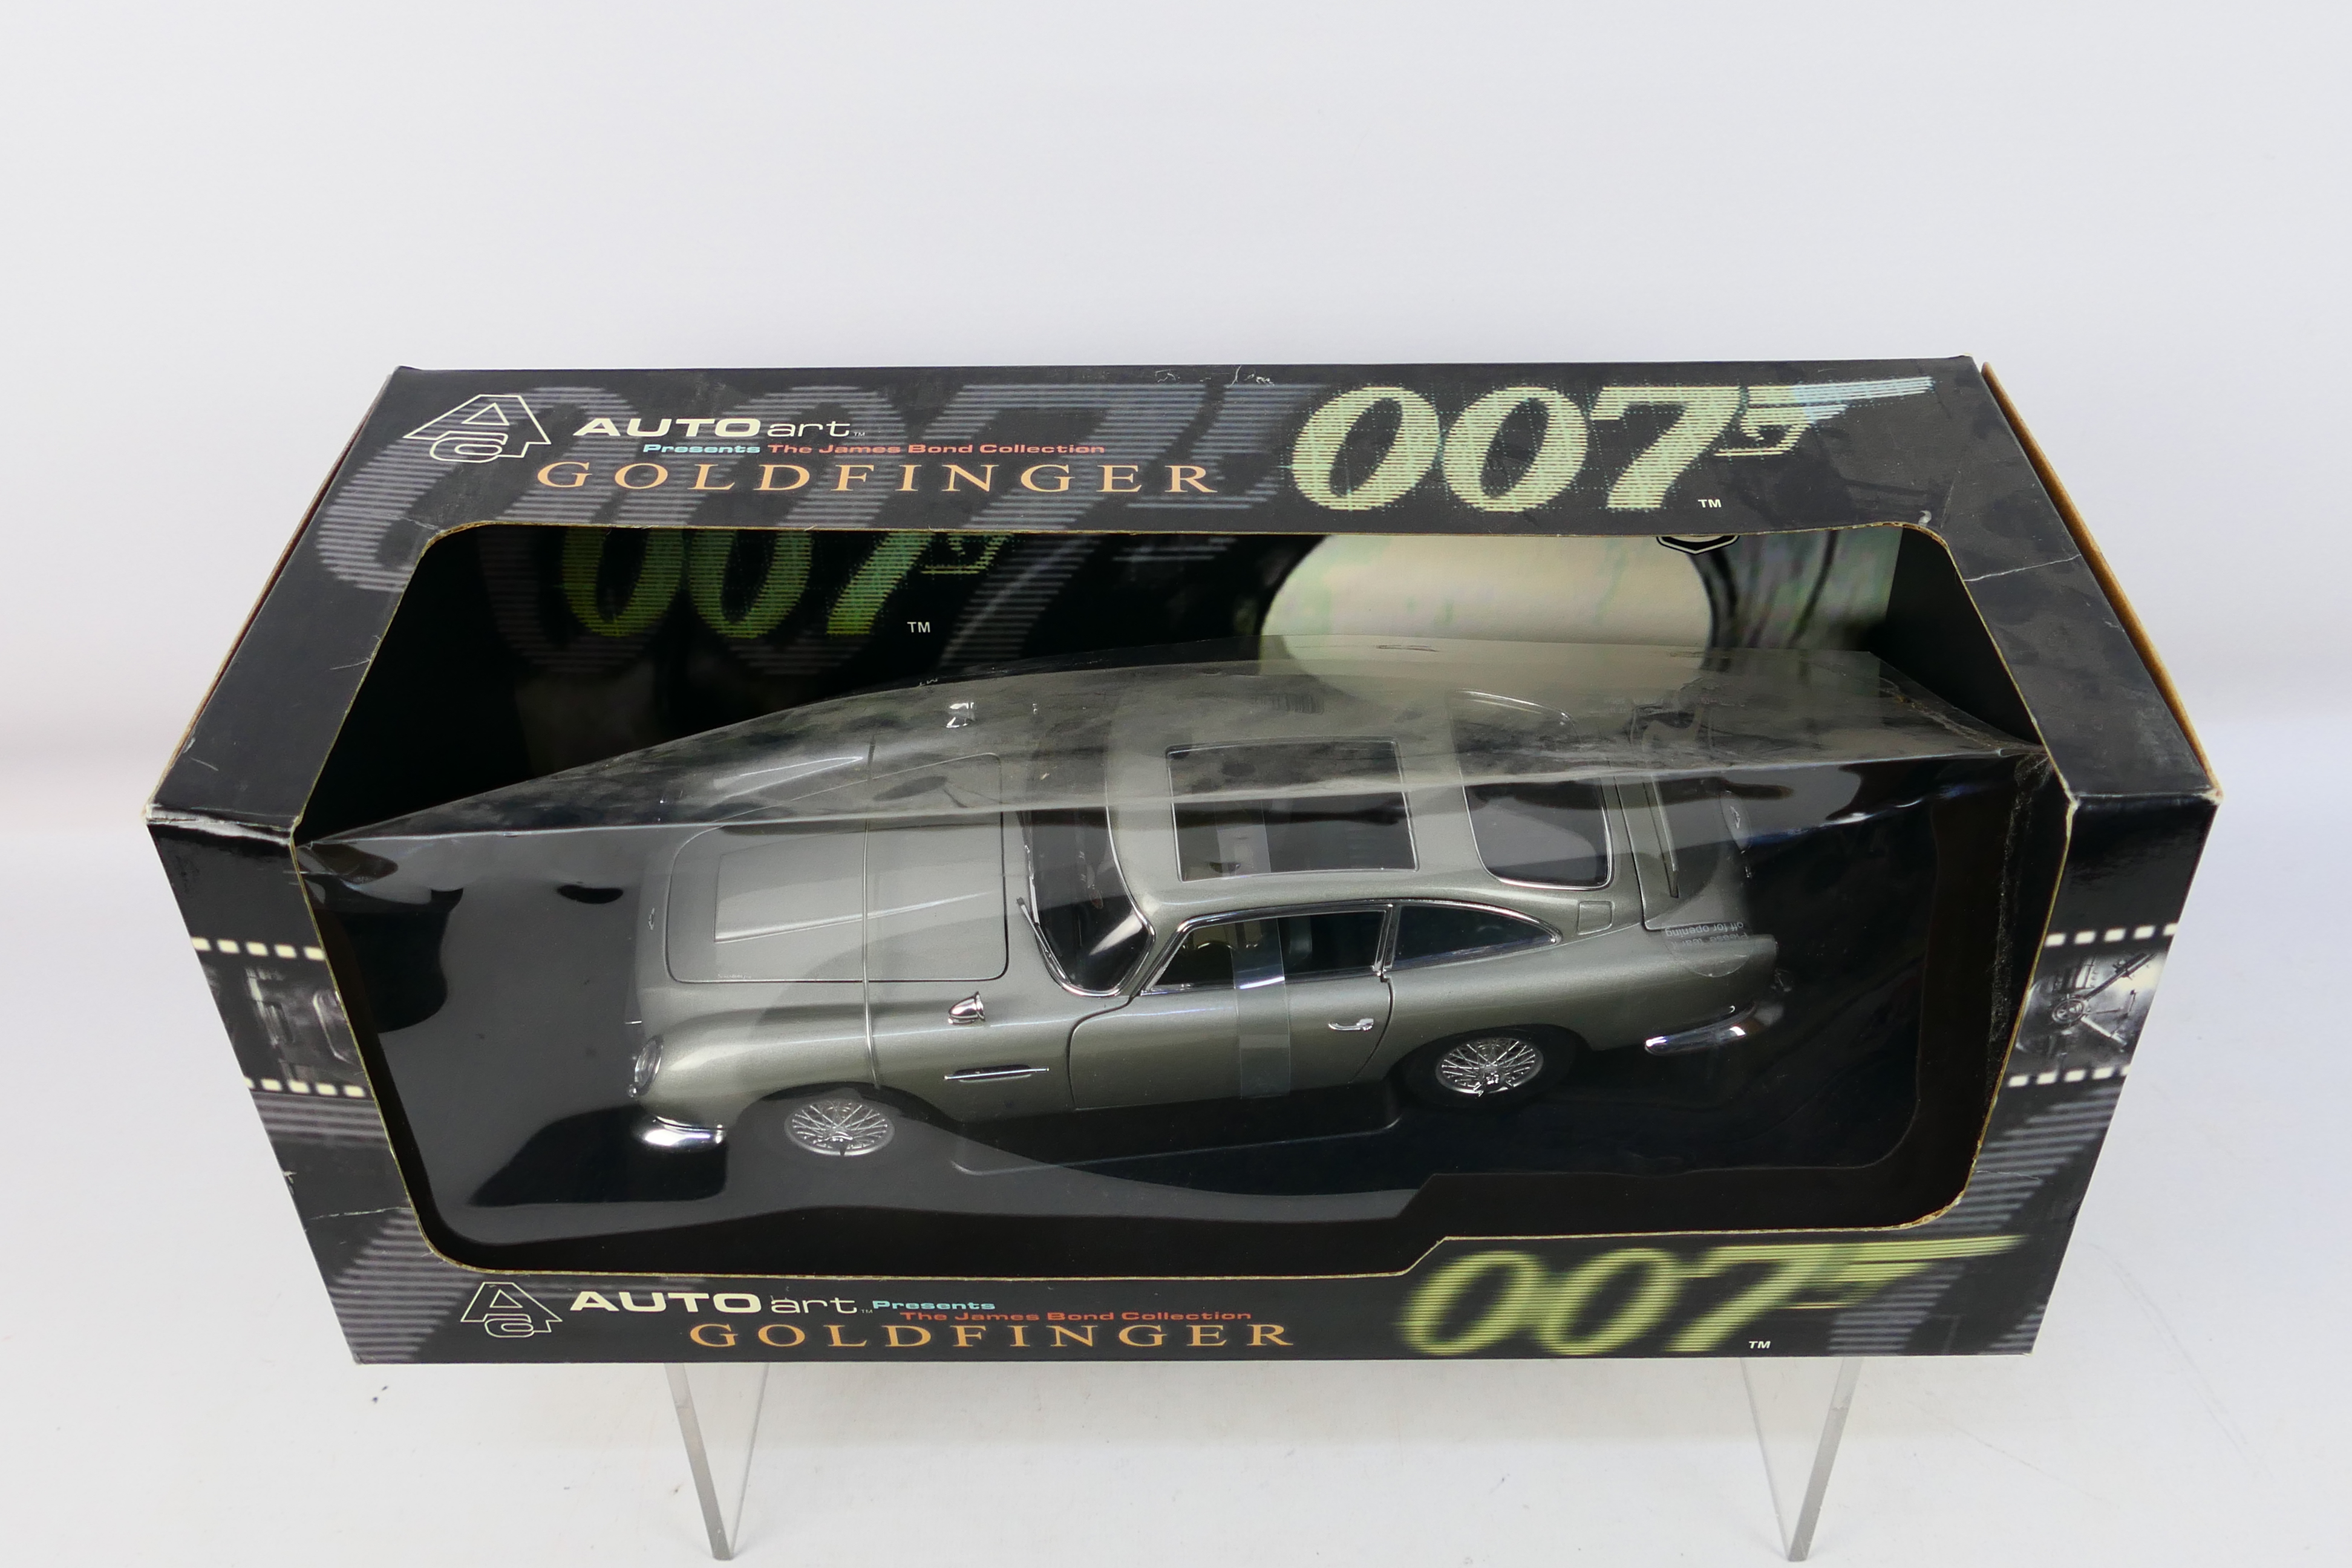 AutoArt - A boxed AutoArt #70021 1:18 scale 'Goldfinger' James Bond's Aston Martin DB5. - Image 3 of 4